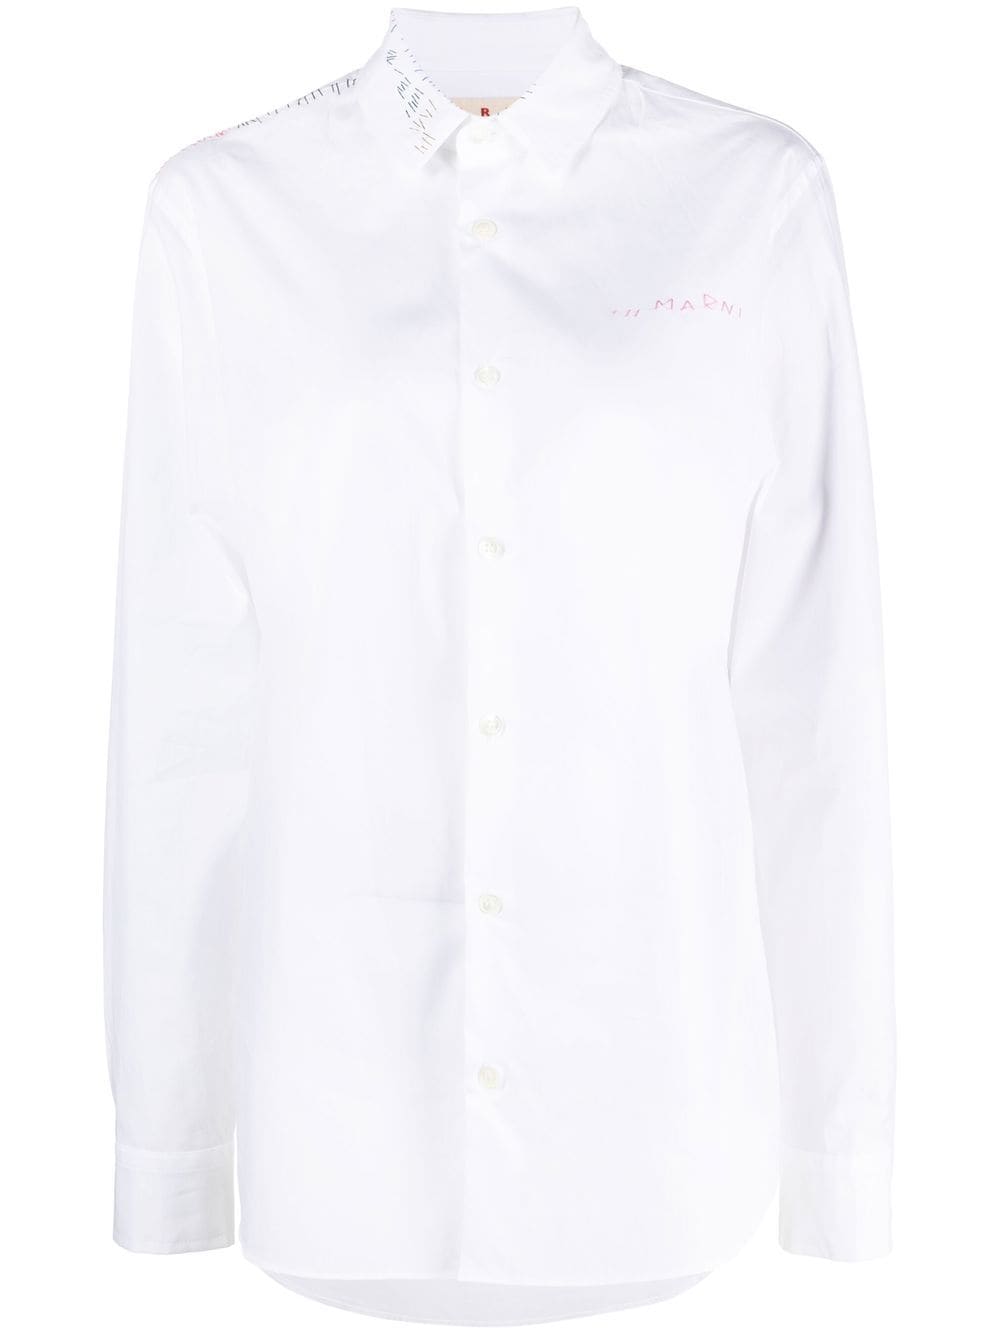 Marni long-sleeve cotton shirt - White von Marni